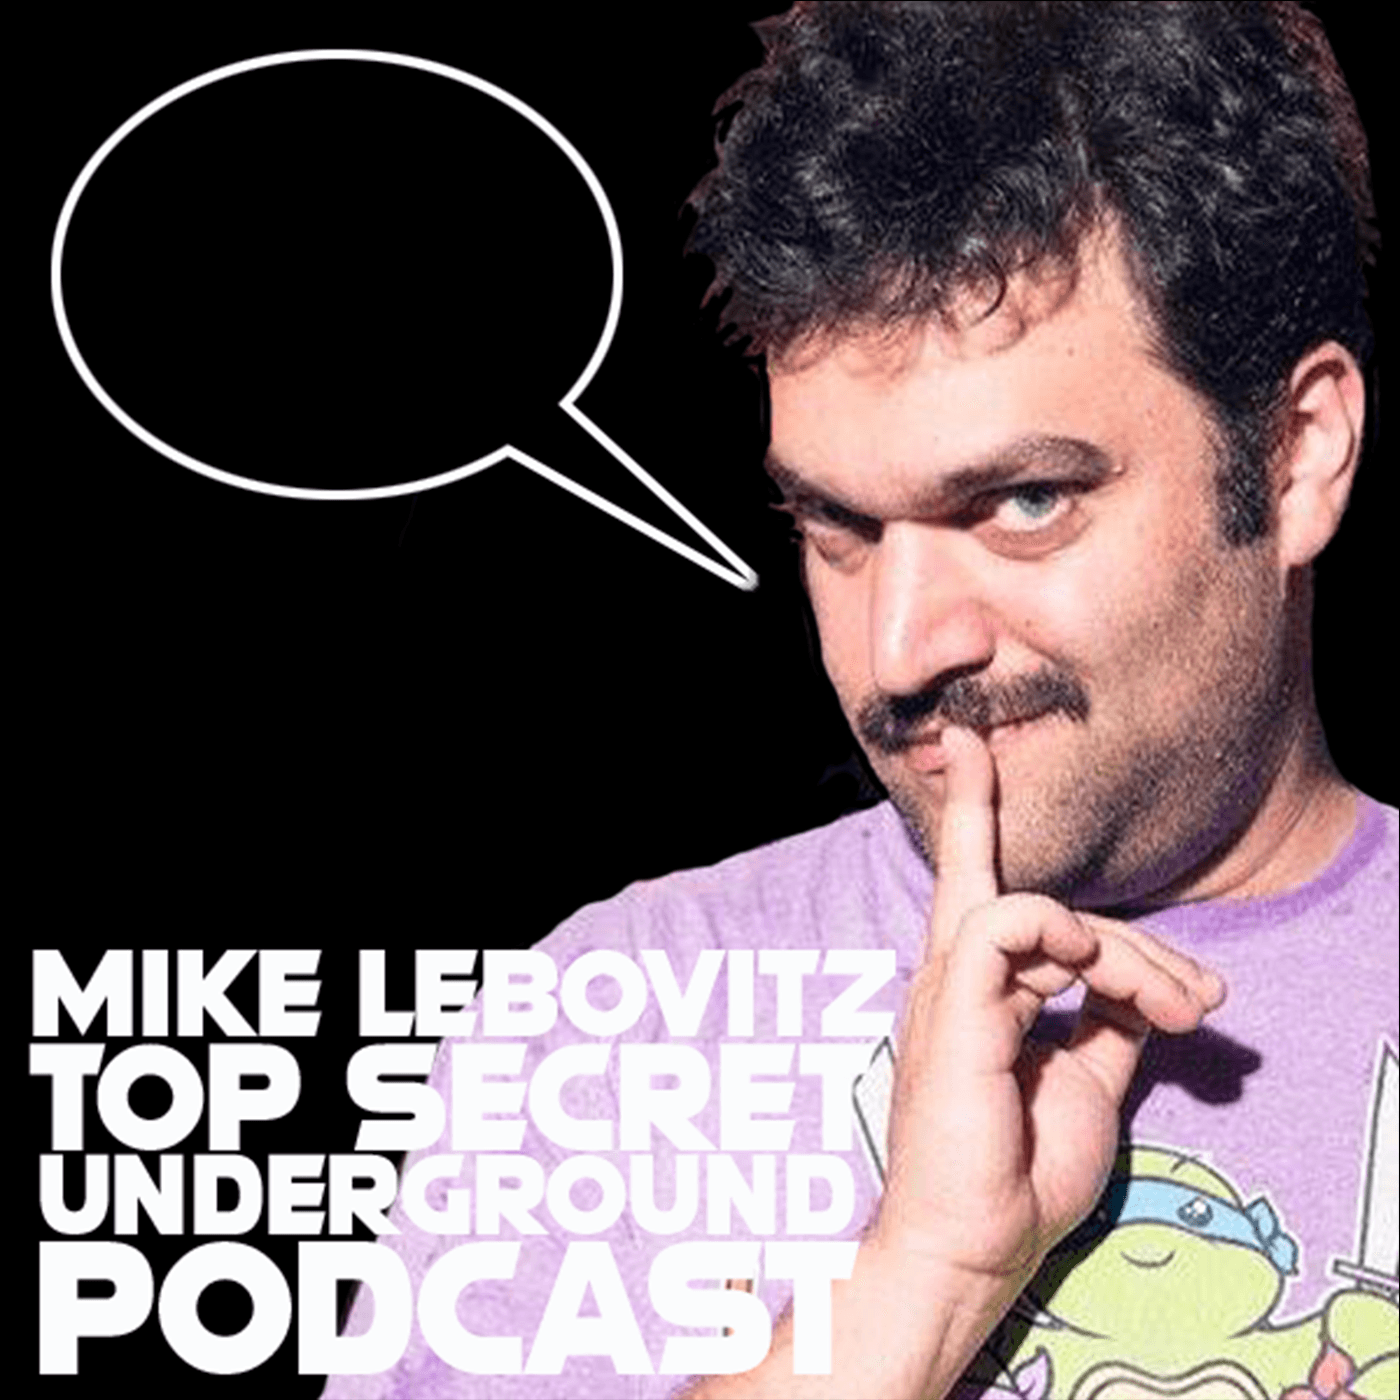 Mike Lebovitz Top Secret Underground Podcast